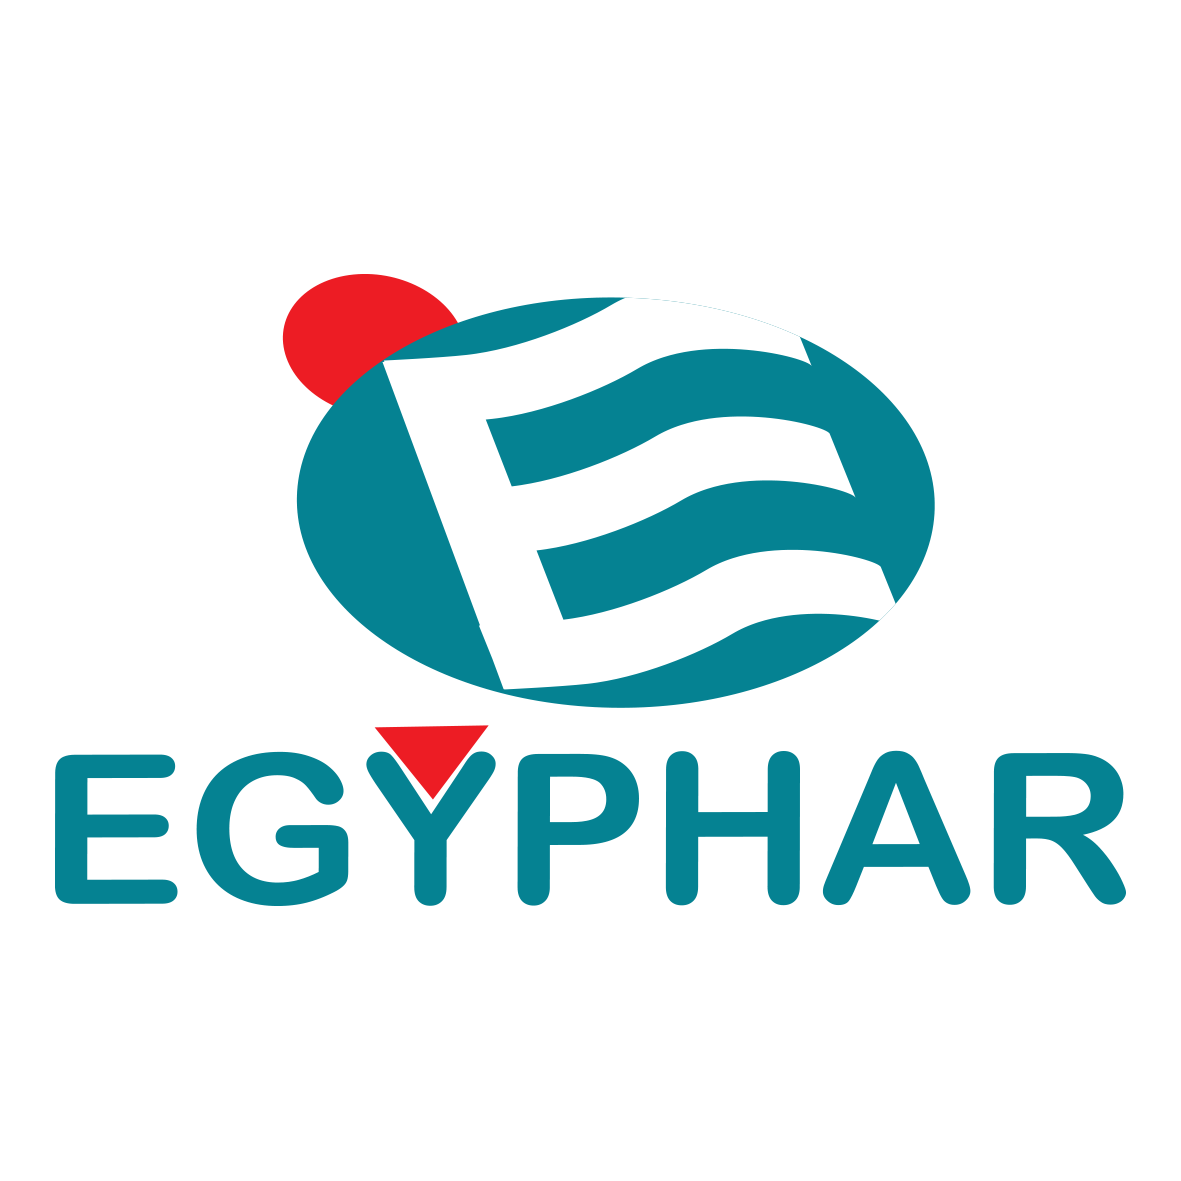 Egyphar pharmaceutical company